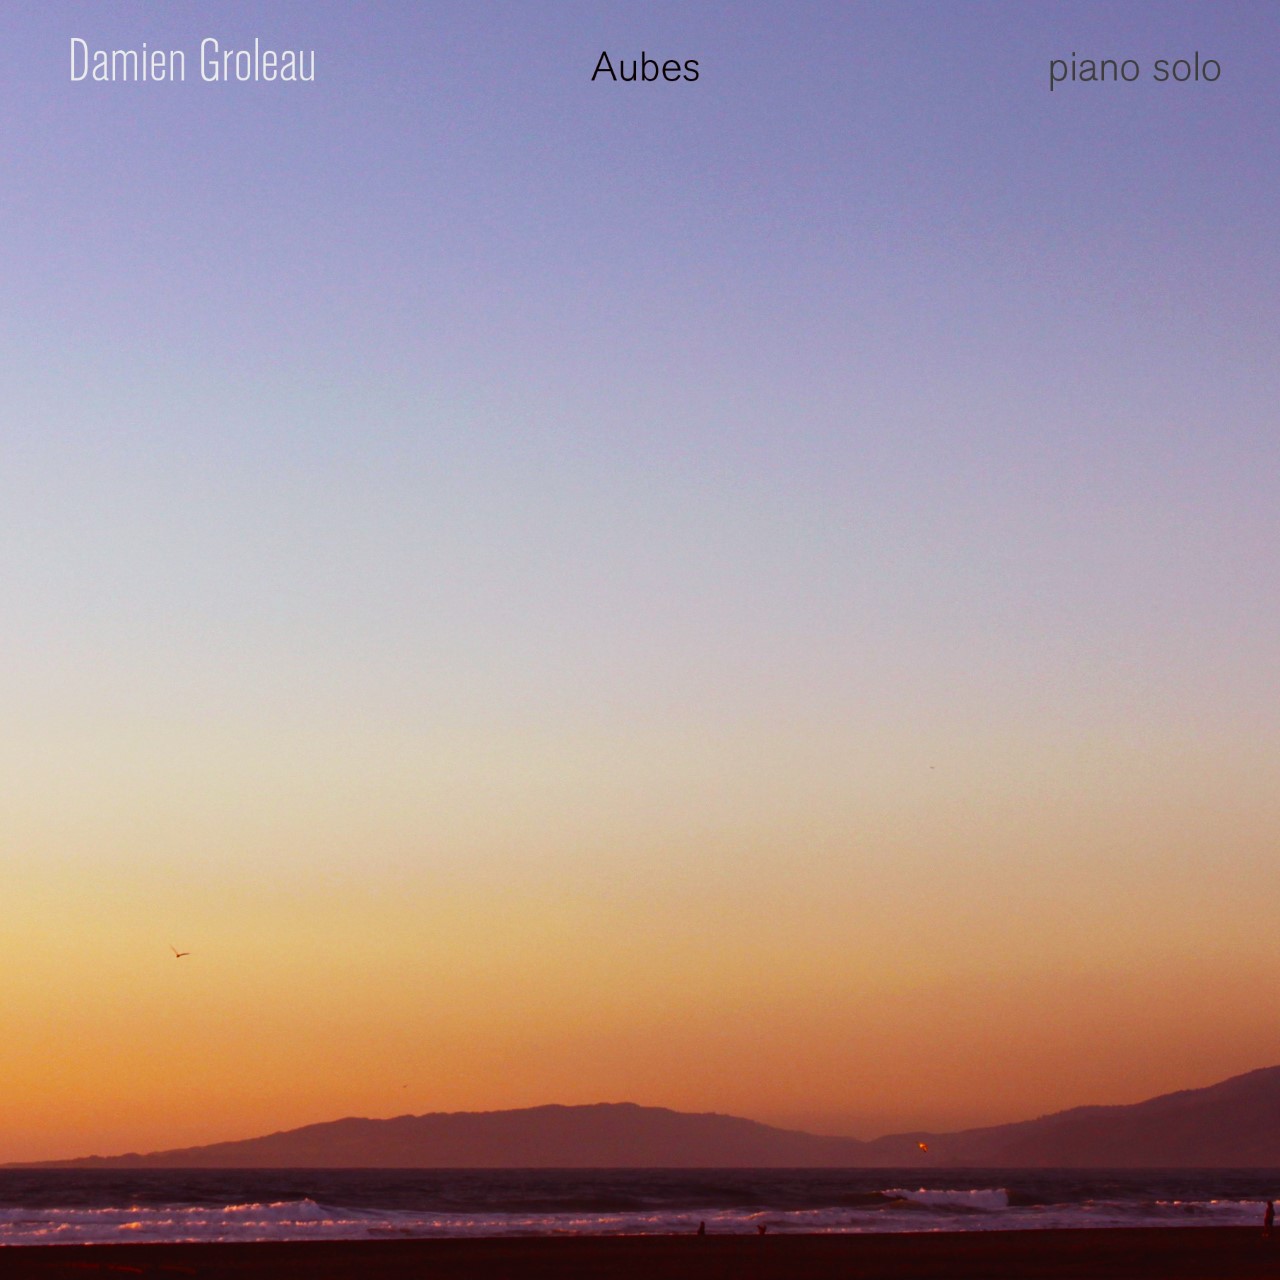     Damien Groleau,             pianist, flautist, composer
     - Album Aubes